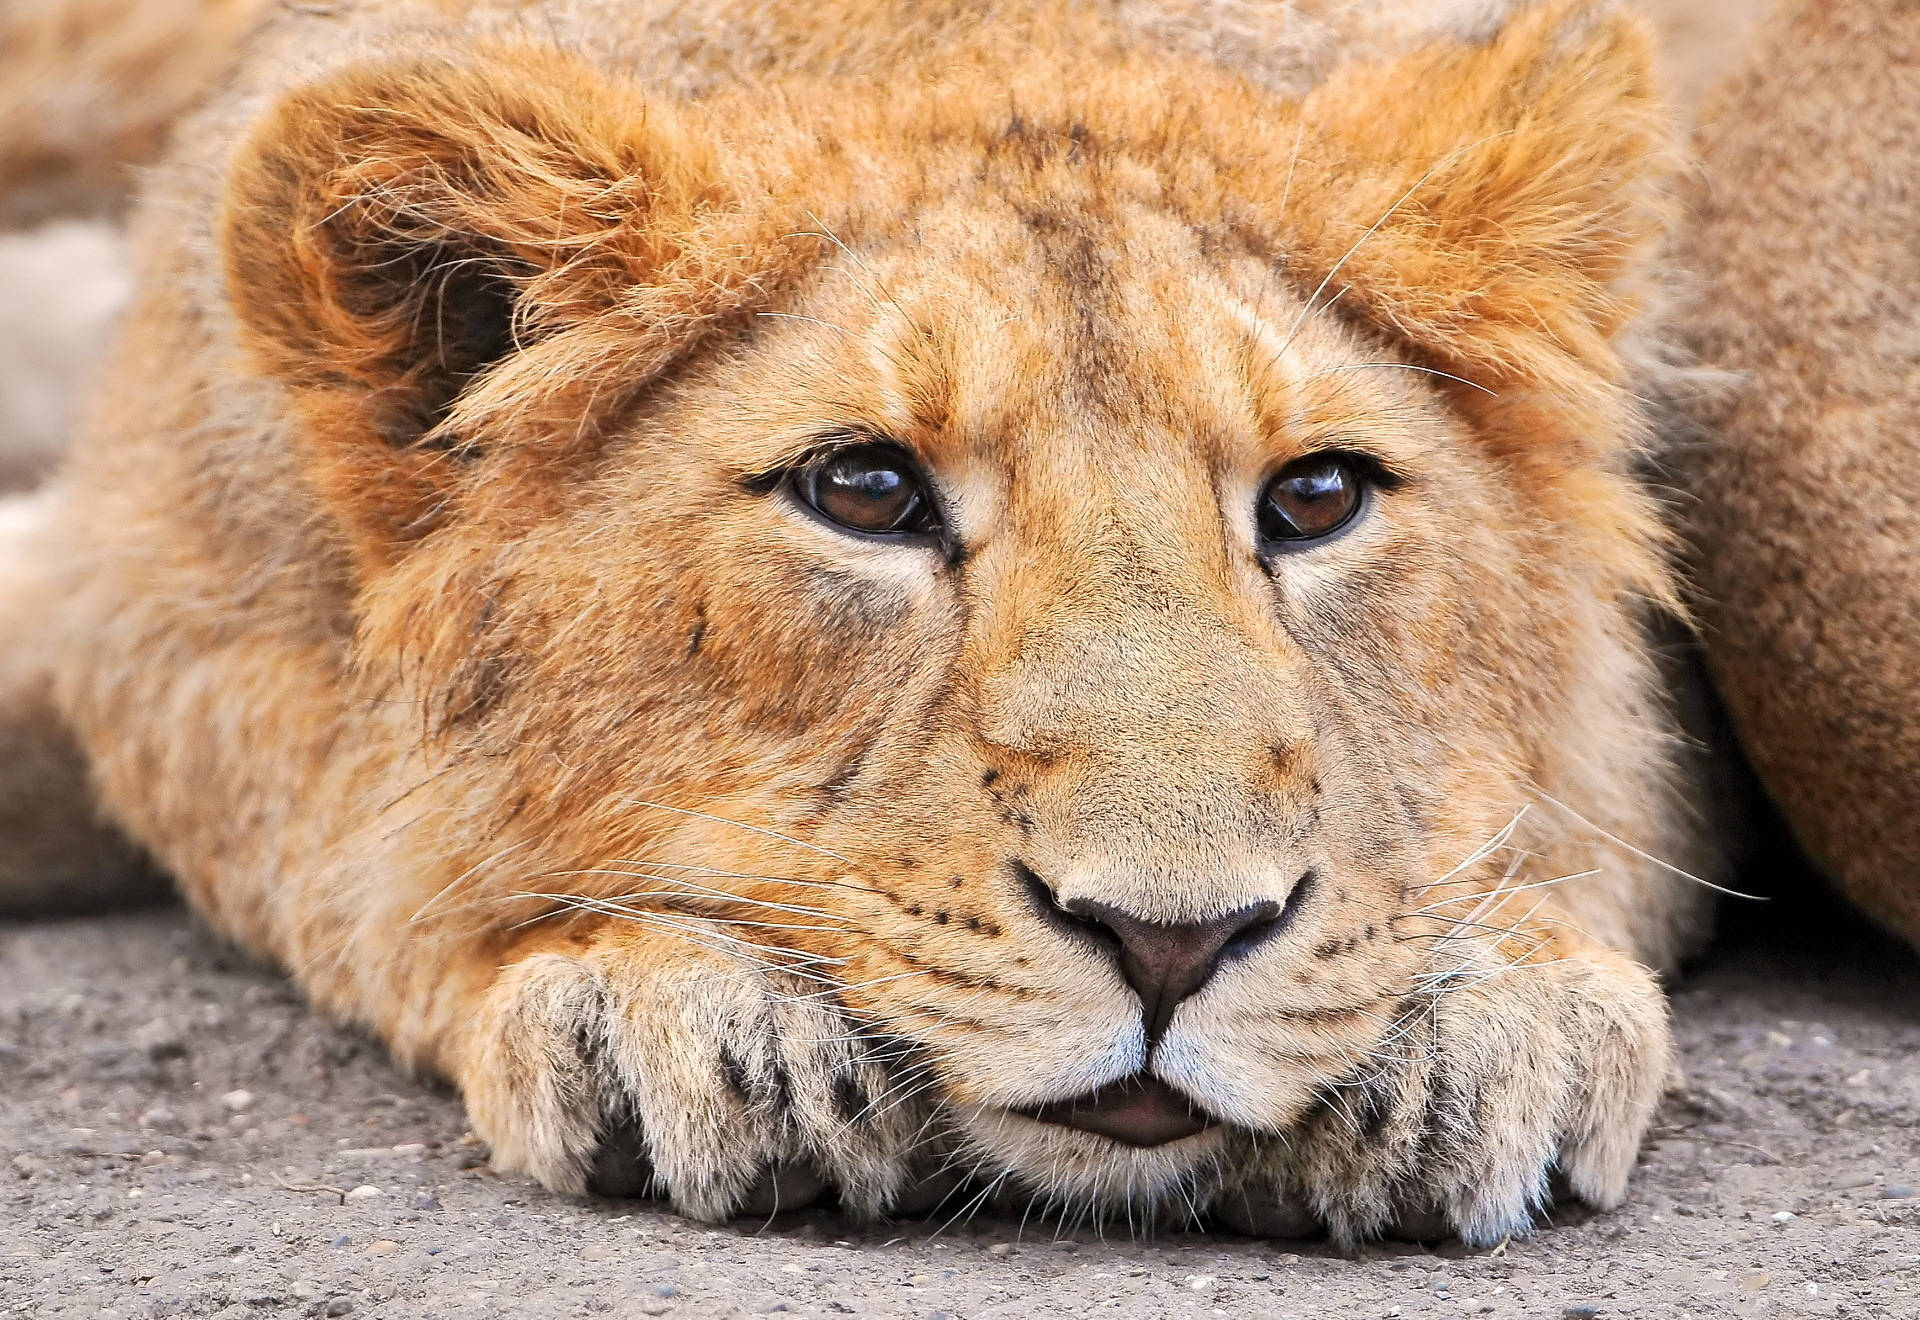 Watchful Lion